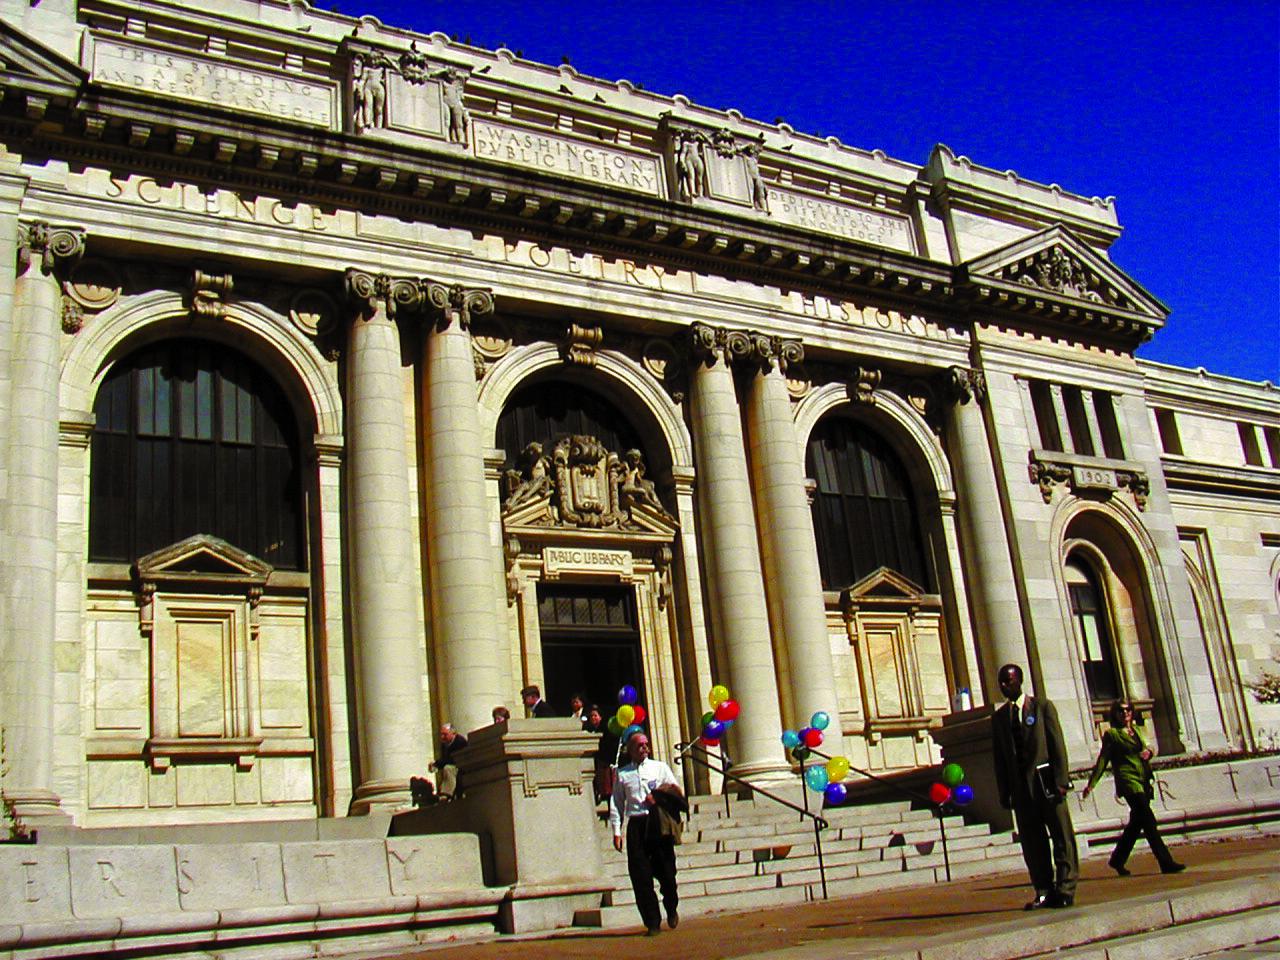 City Museum of DC